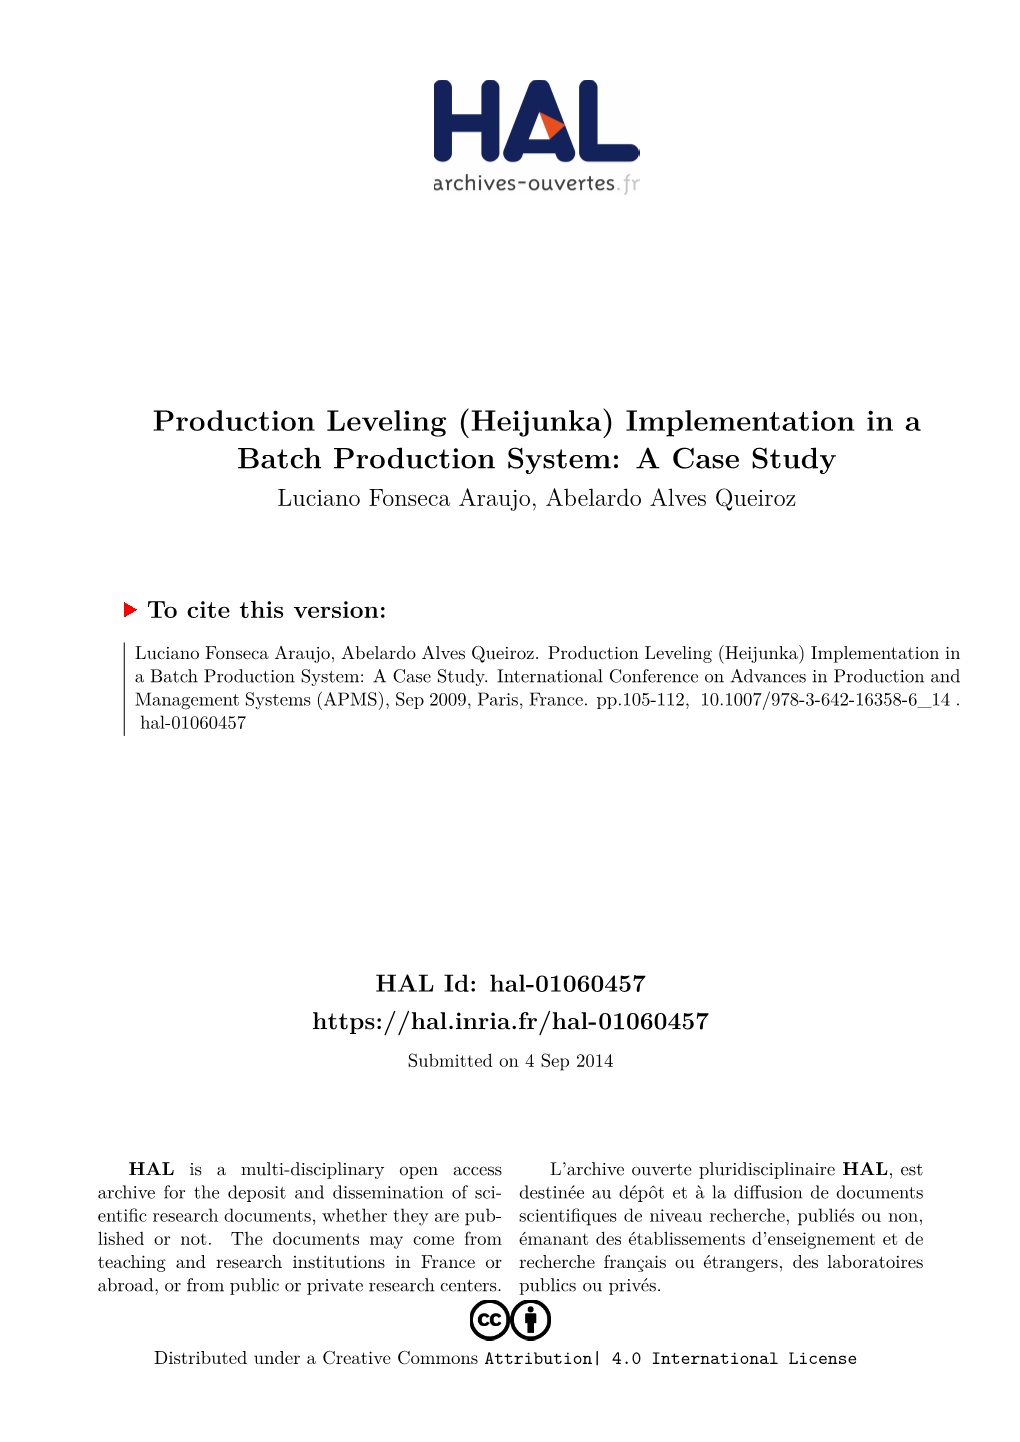 Production Leveling (Heijunka) Implementation in a Batch Production System: a Case Study Luciano Fonseca Araujo, Abelardo Alves Queiroz